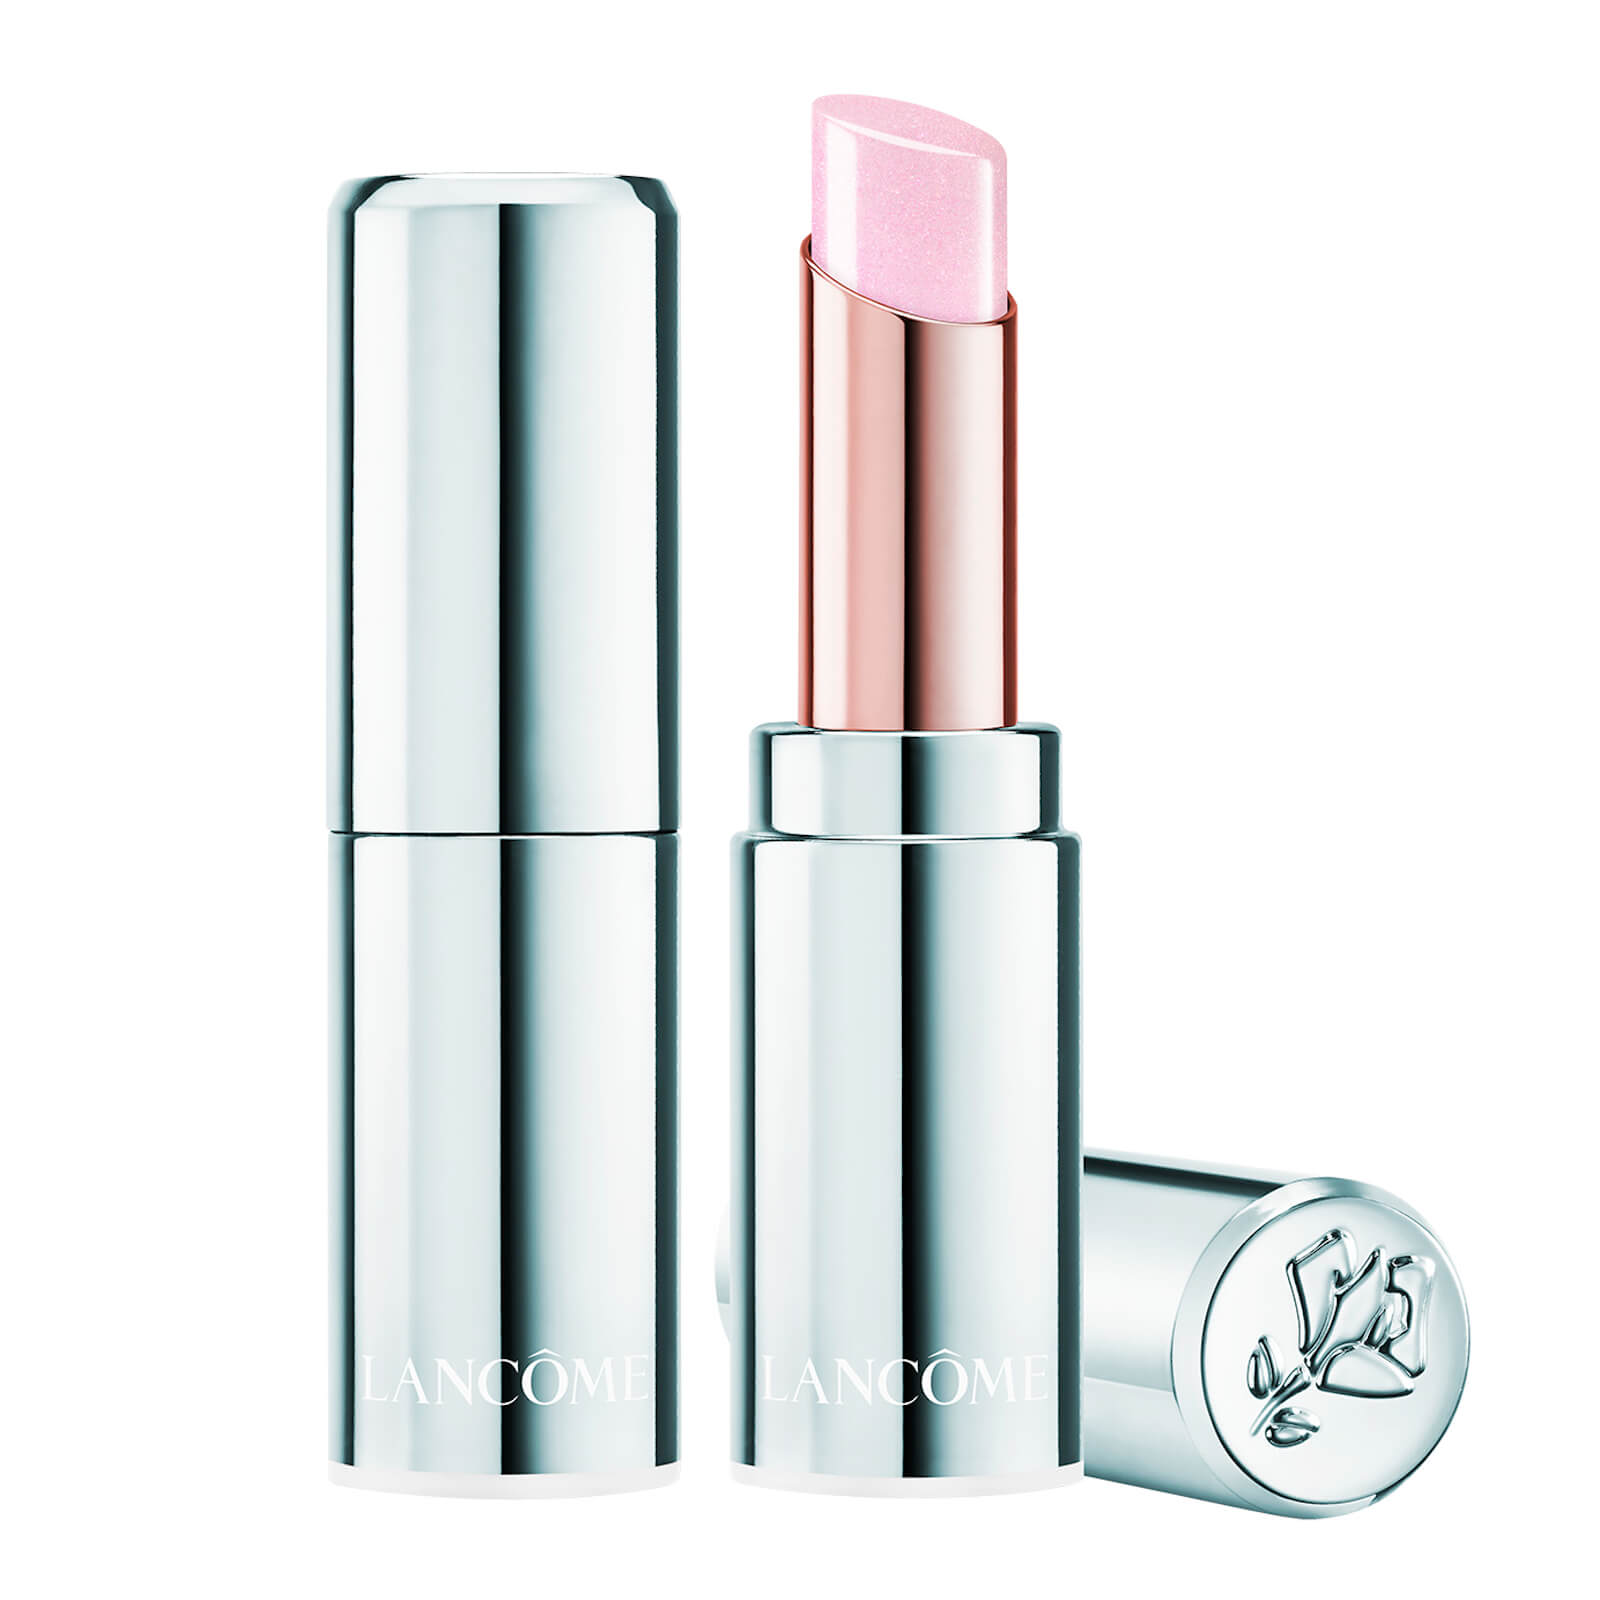 Lancôme Lippenbalsem Lancôme – L’ABSOLU MADEMOISELLE COOLING BALM Lipstick ICE COLD PINK 002